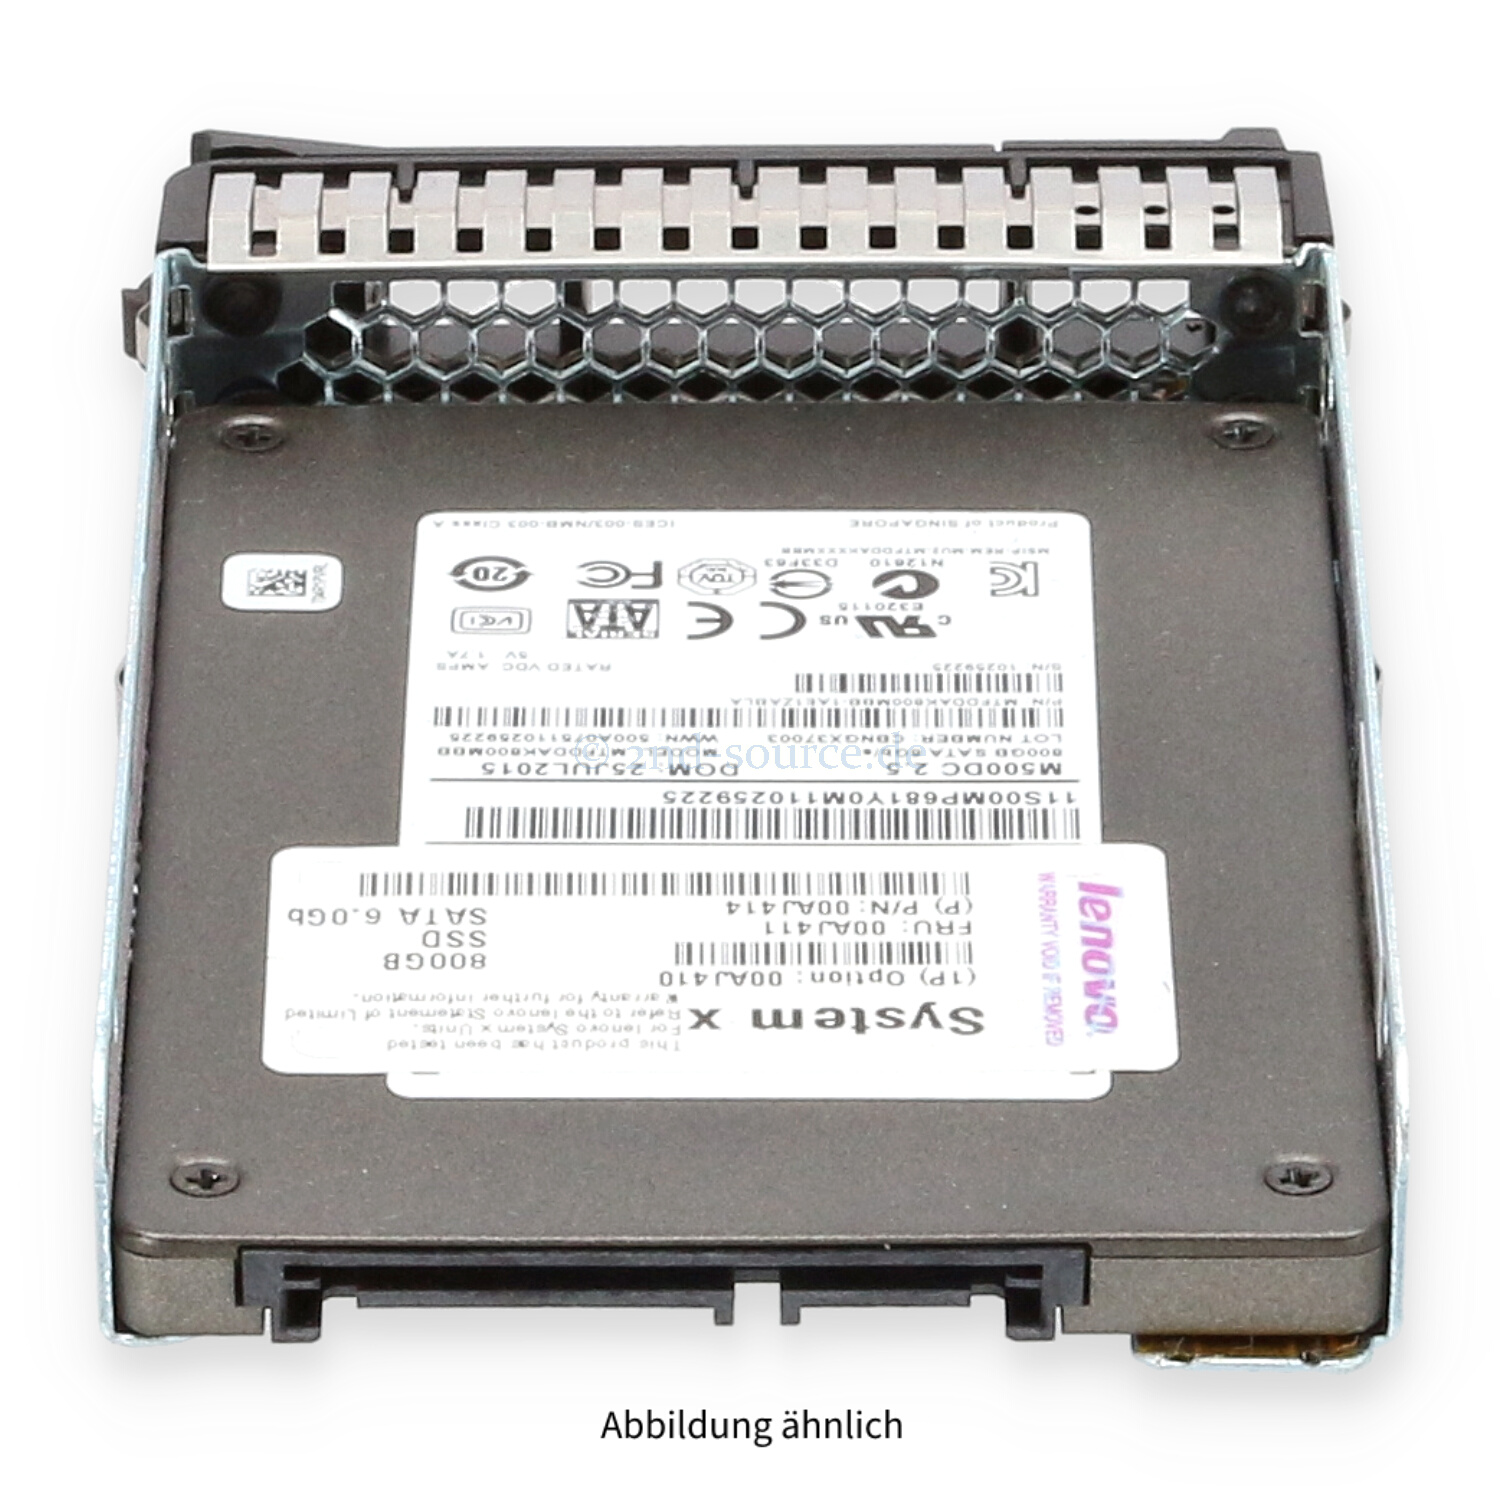 Lenovo 800GB SATA 6G SFF Mixed Use HotPlug SSD 00AJ410 00AJ411 00AJ414